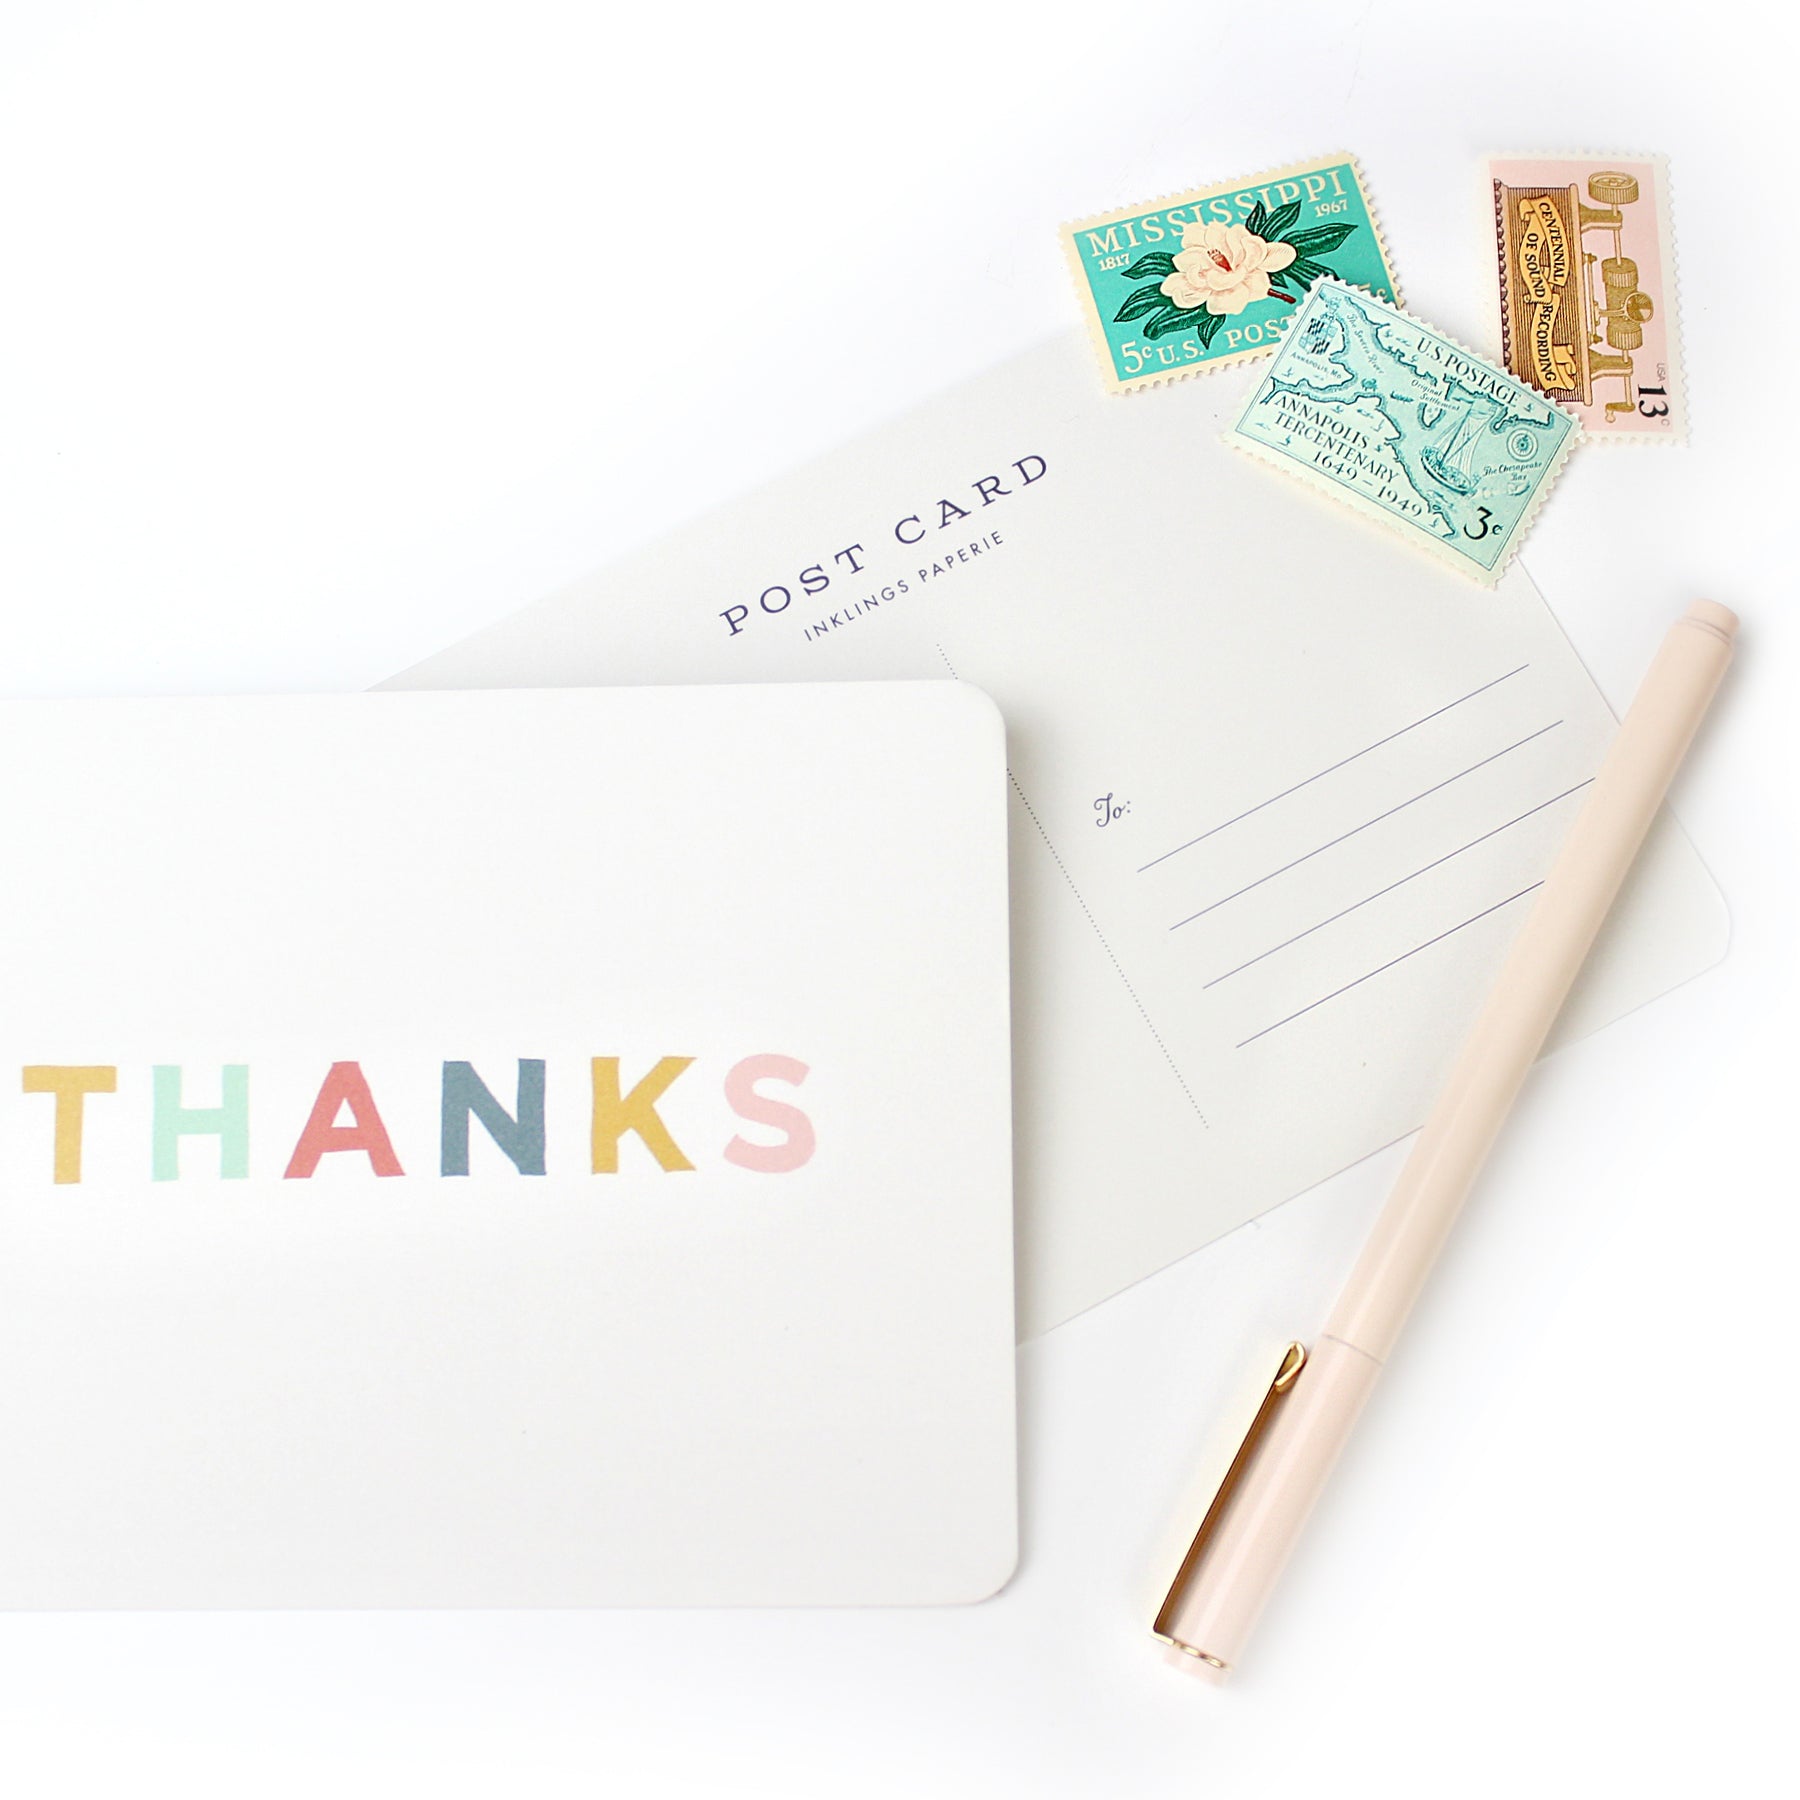 4 Things® Gratitude Journal 3.0 – The Shop Forward